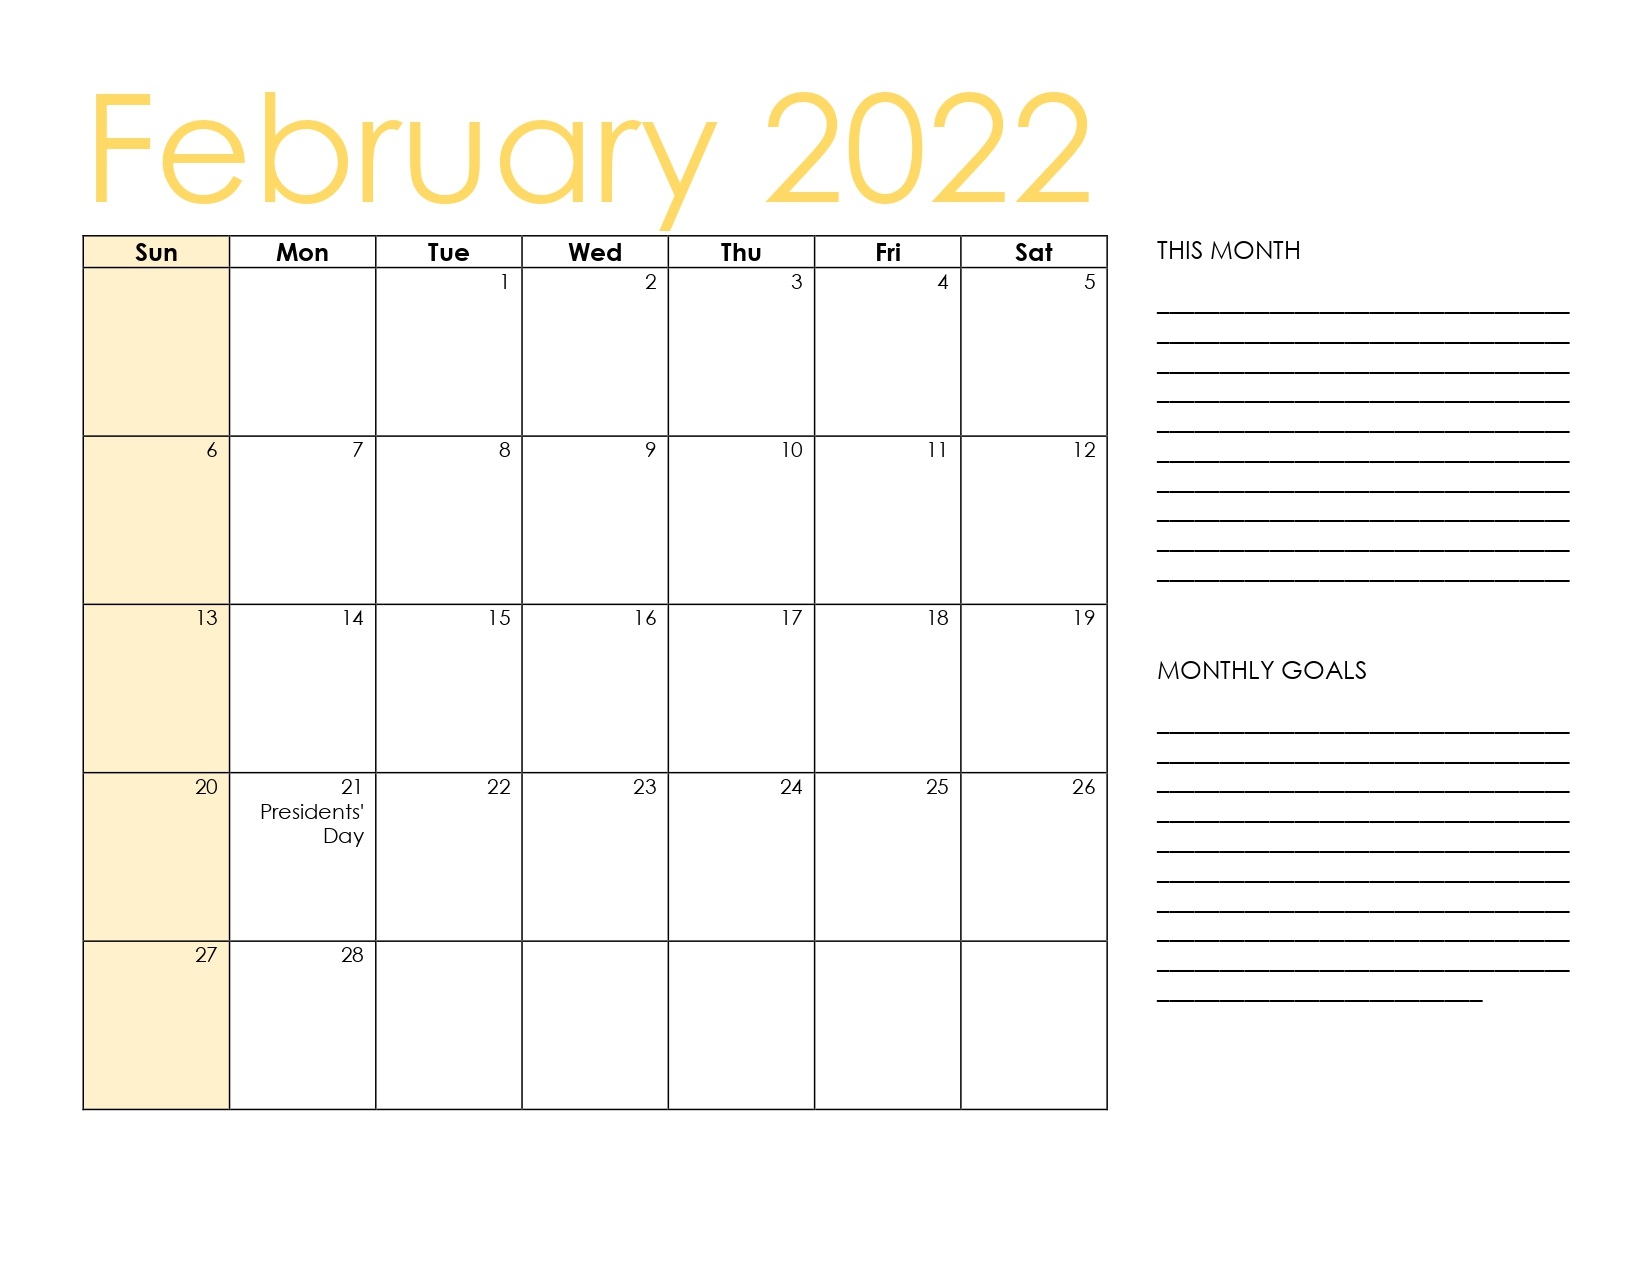 Disney World Crowd Calendar February 2022